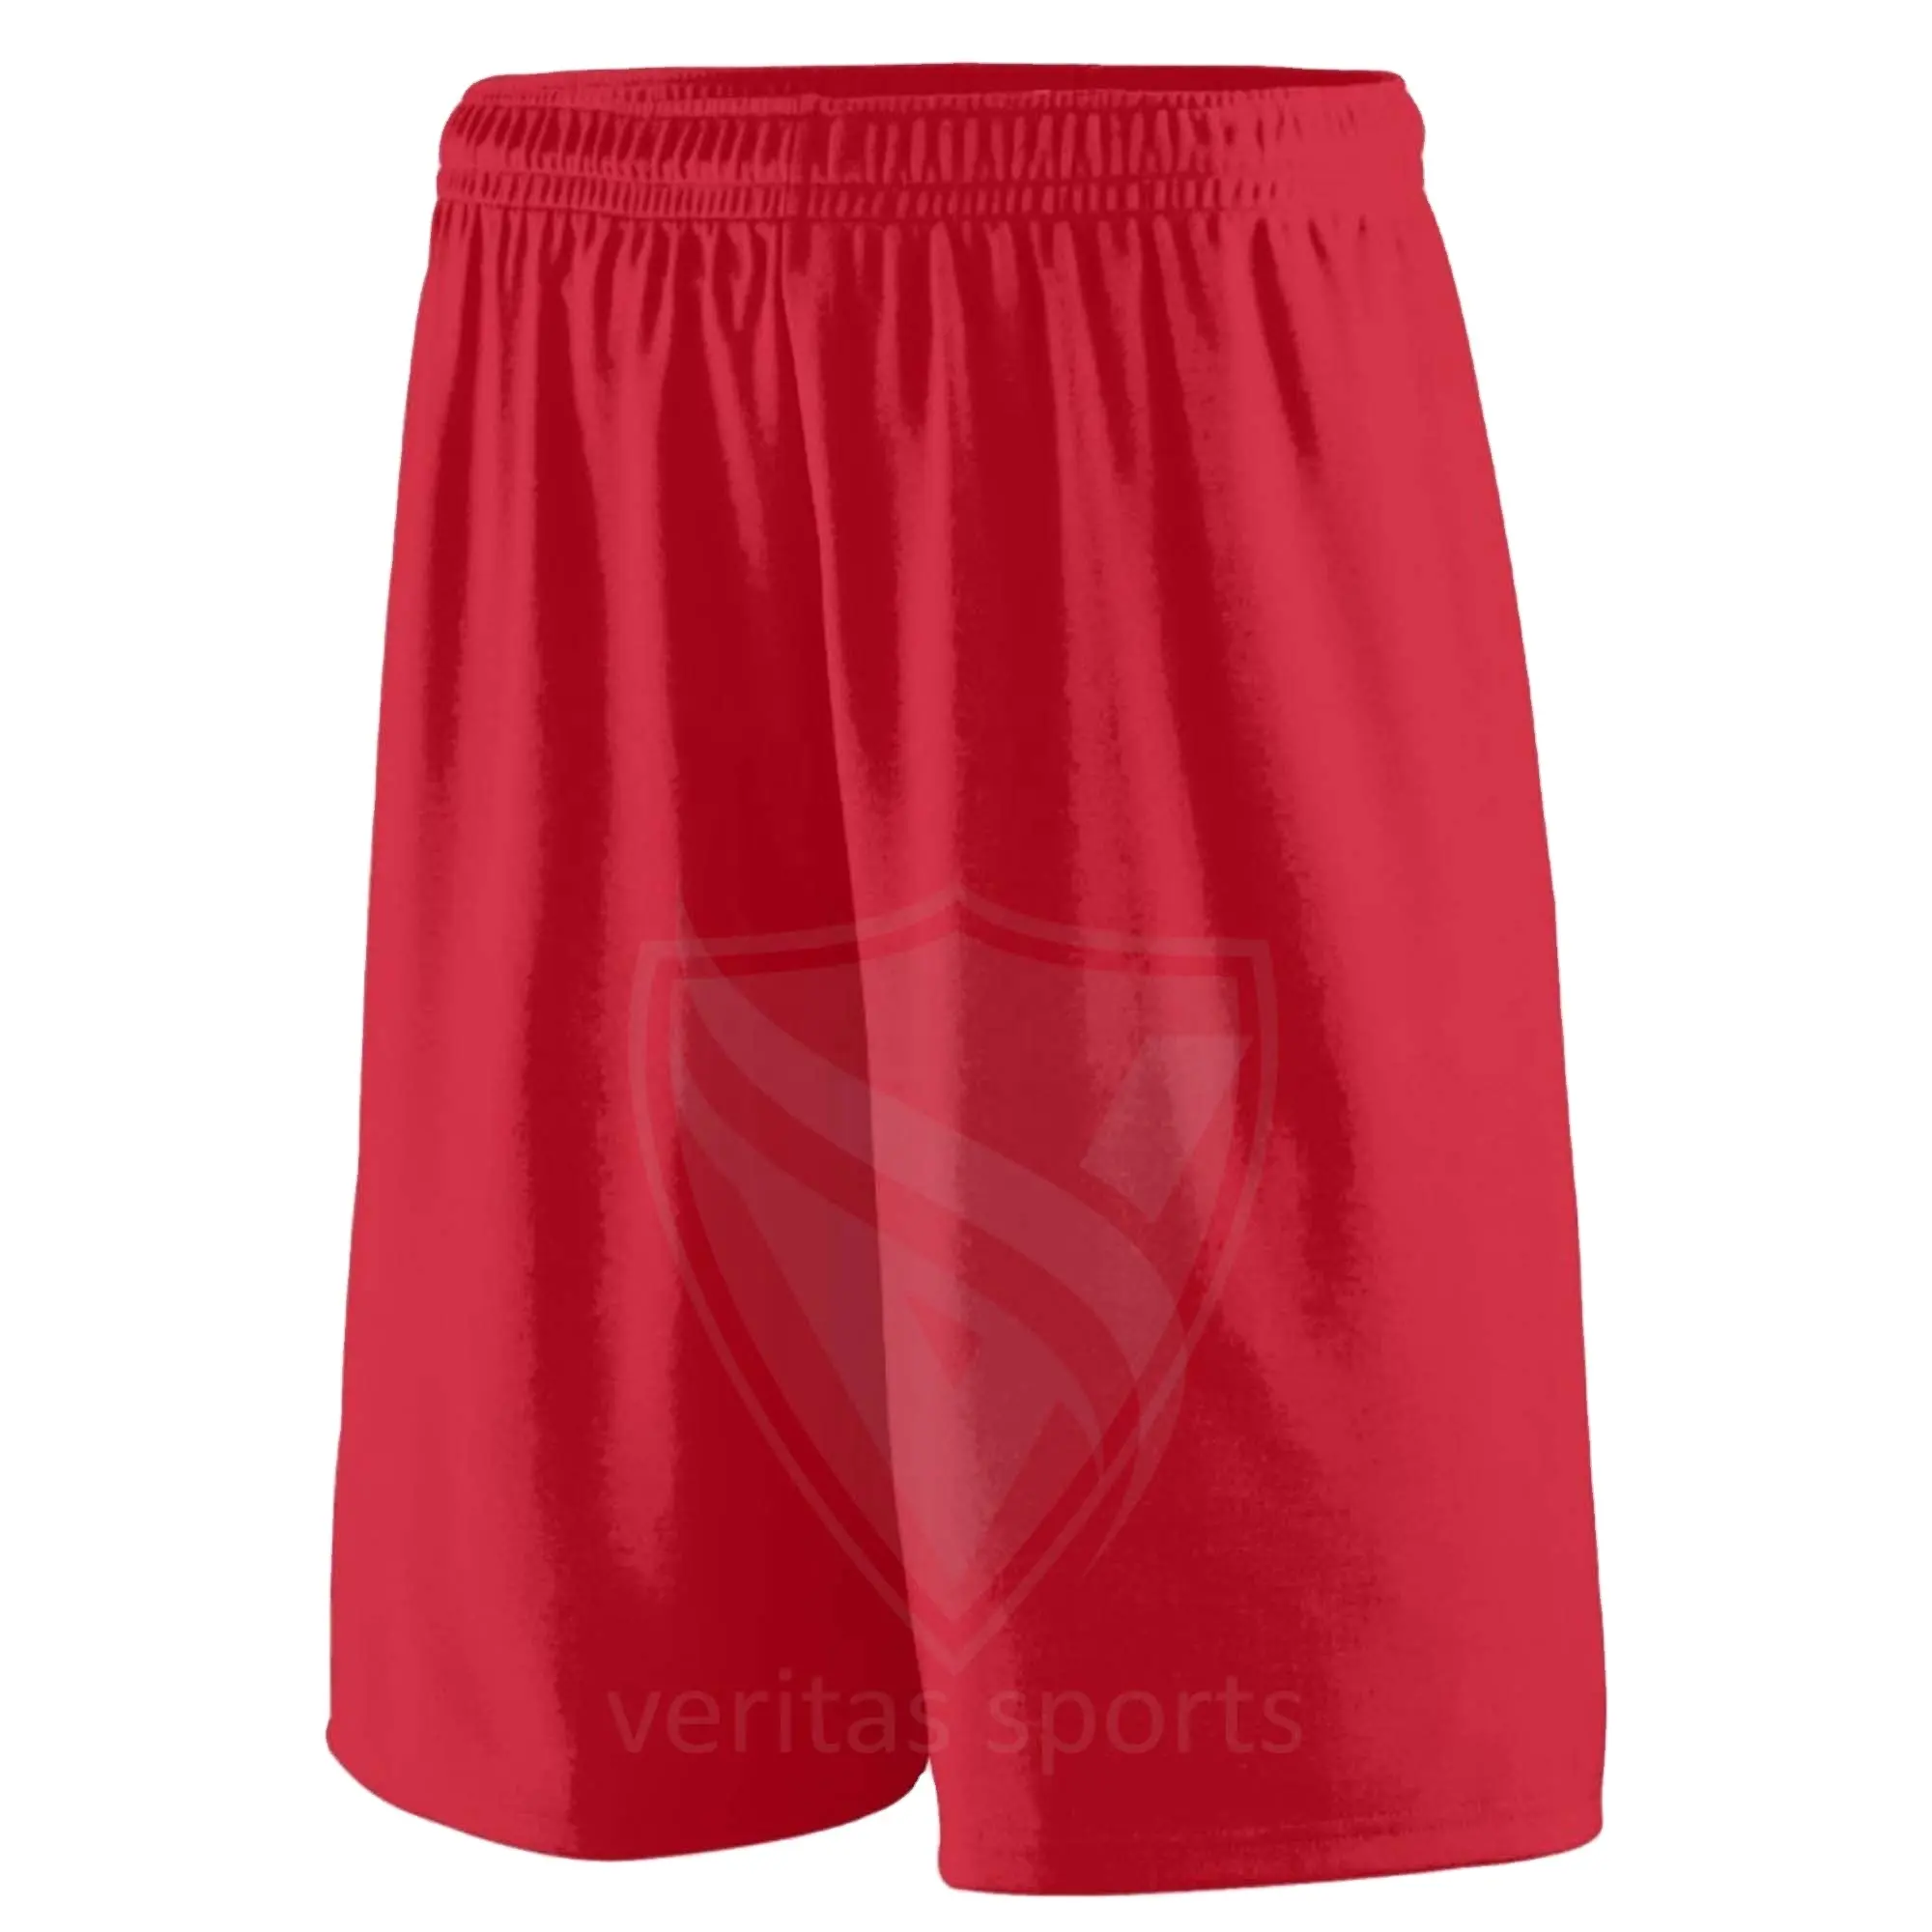 Premium Qualität 100% Polyester Stoff Herren Rote Farbe Shorts USA